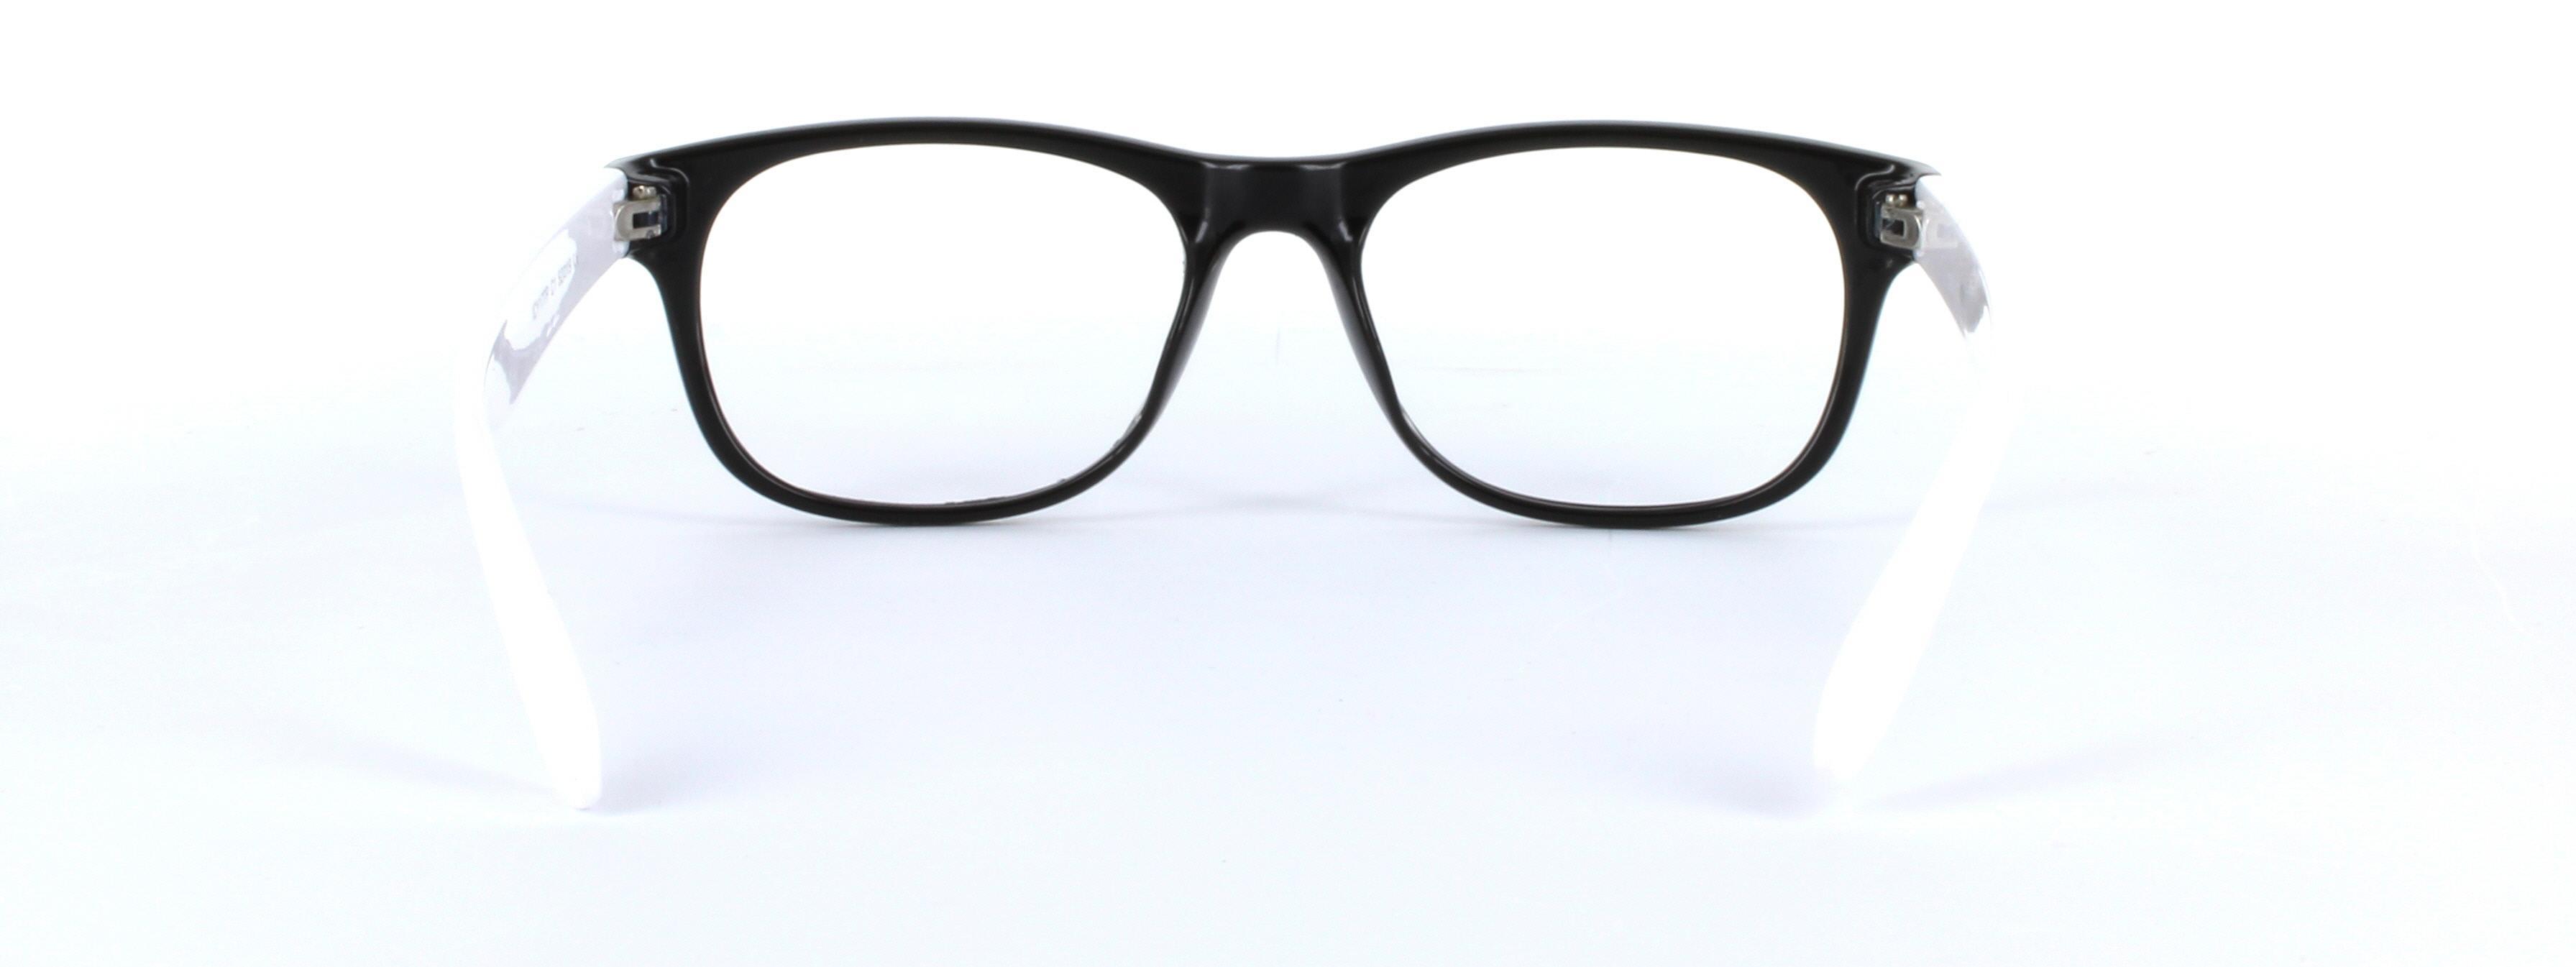 Brazil Black and White Full Rim Oval Plastic Glasses - Image View 3